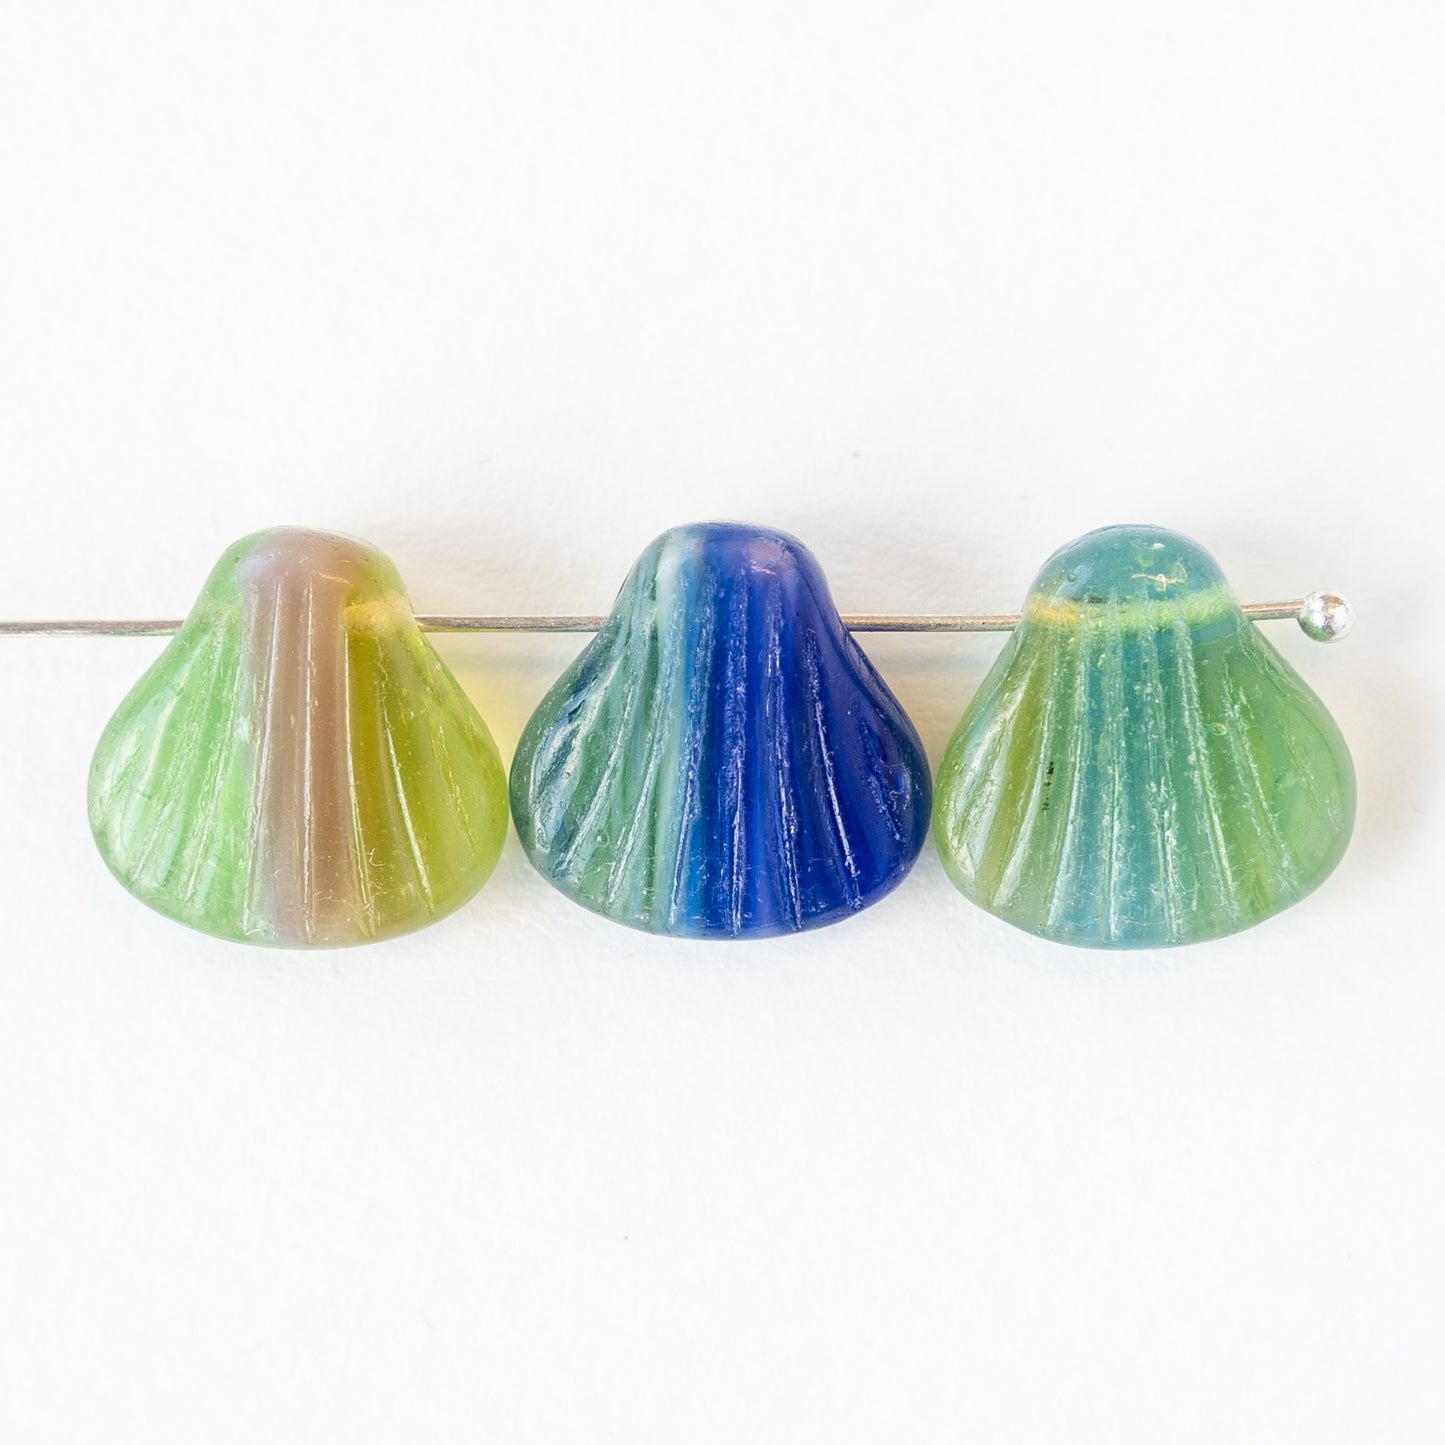 16mm Glass Scallop Shell Beads - Transparent Blue Mix - 15 Beads